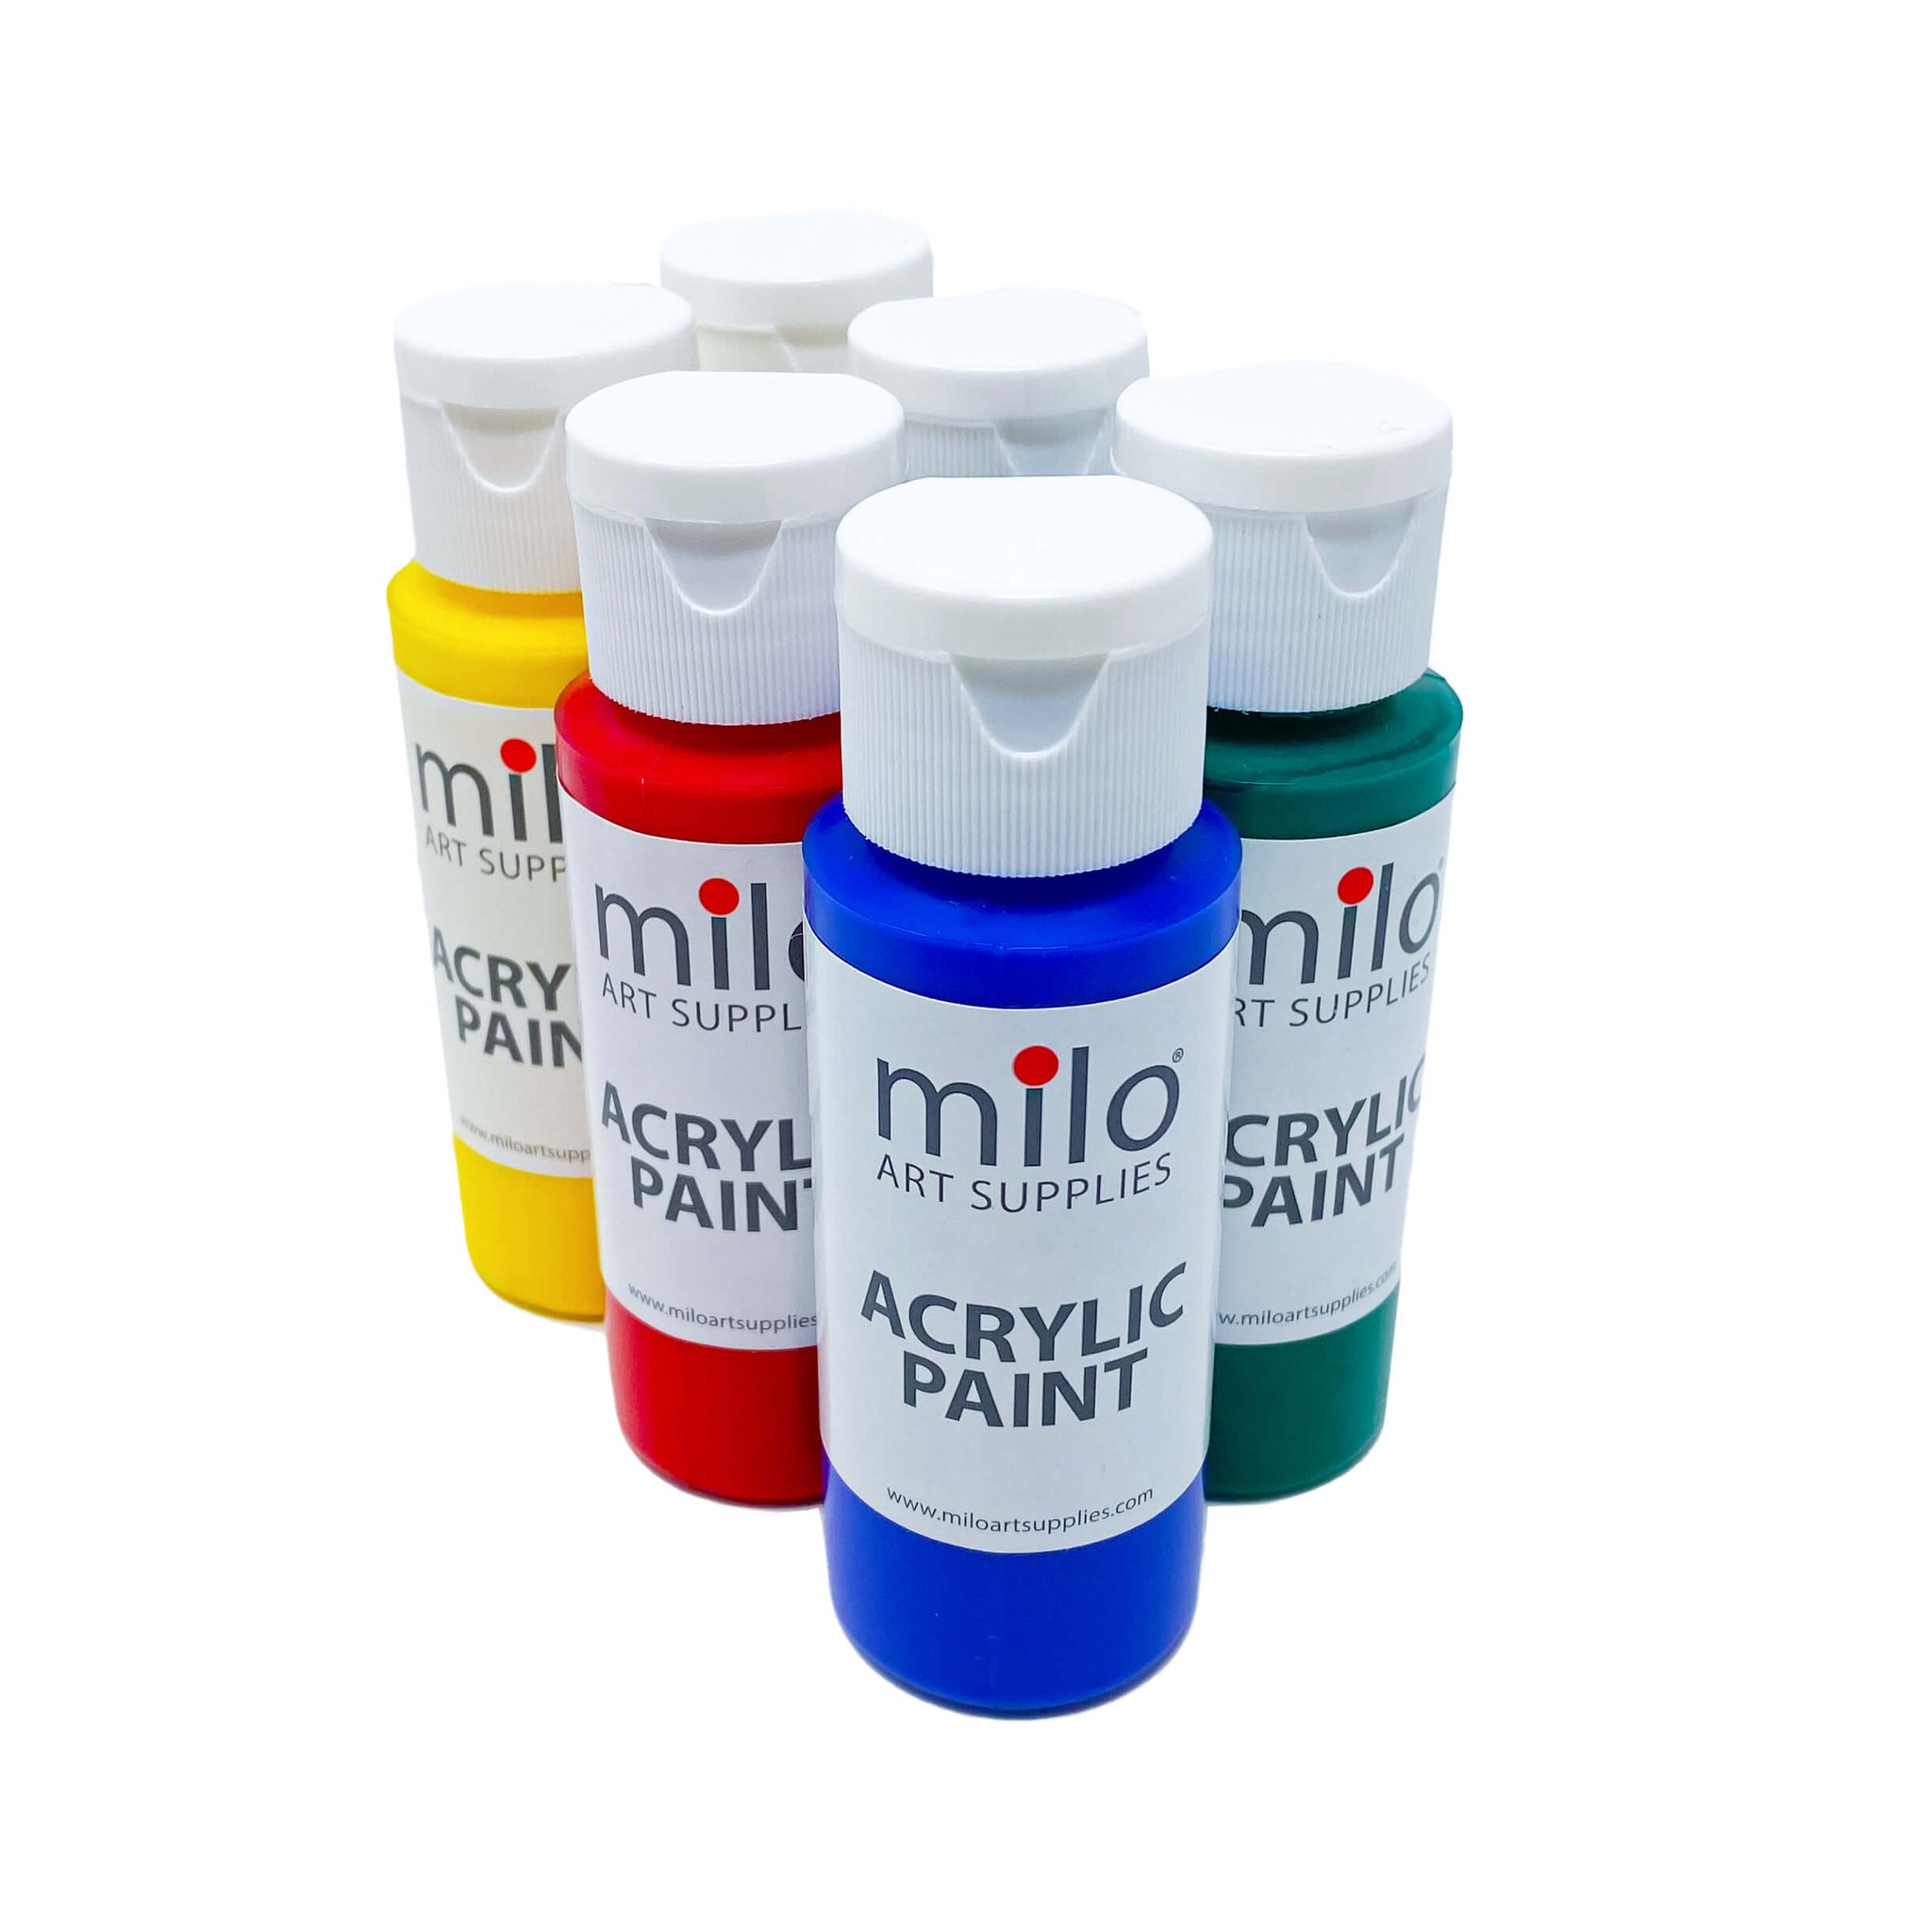 Milo Acrylic Paint 2 oz Bottles Set of 6 – Milo Art Supplies